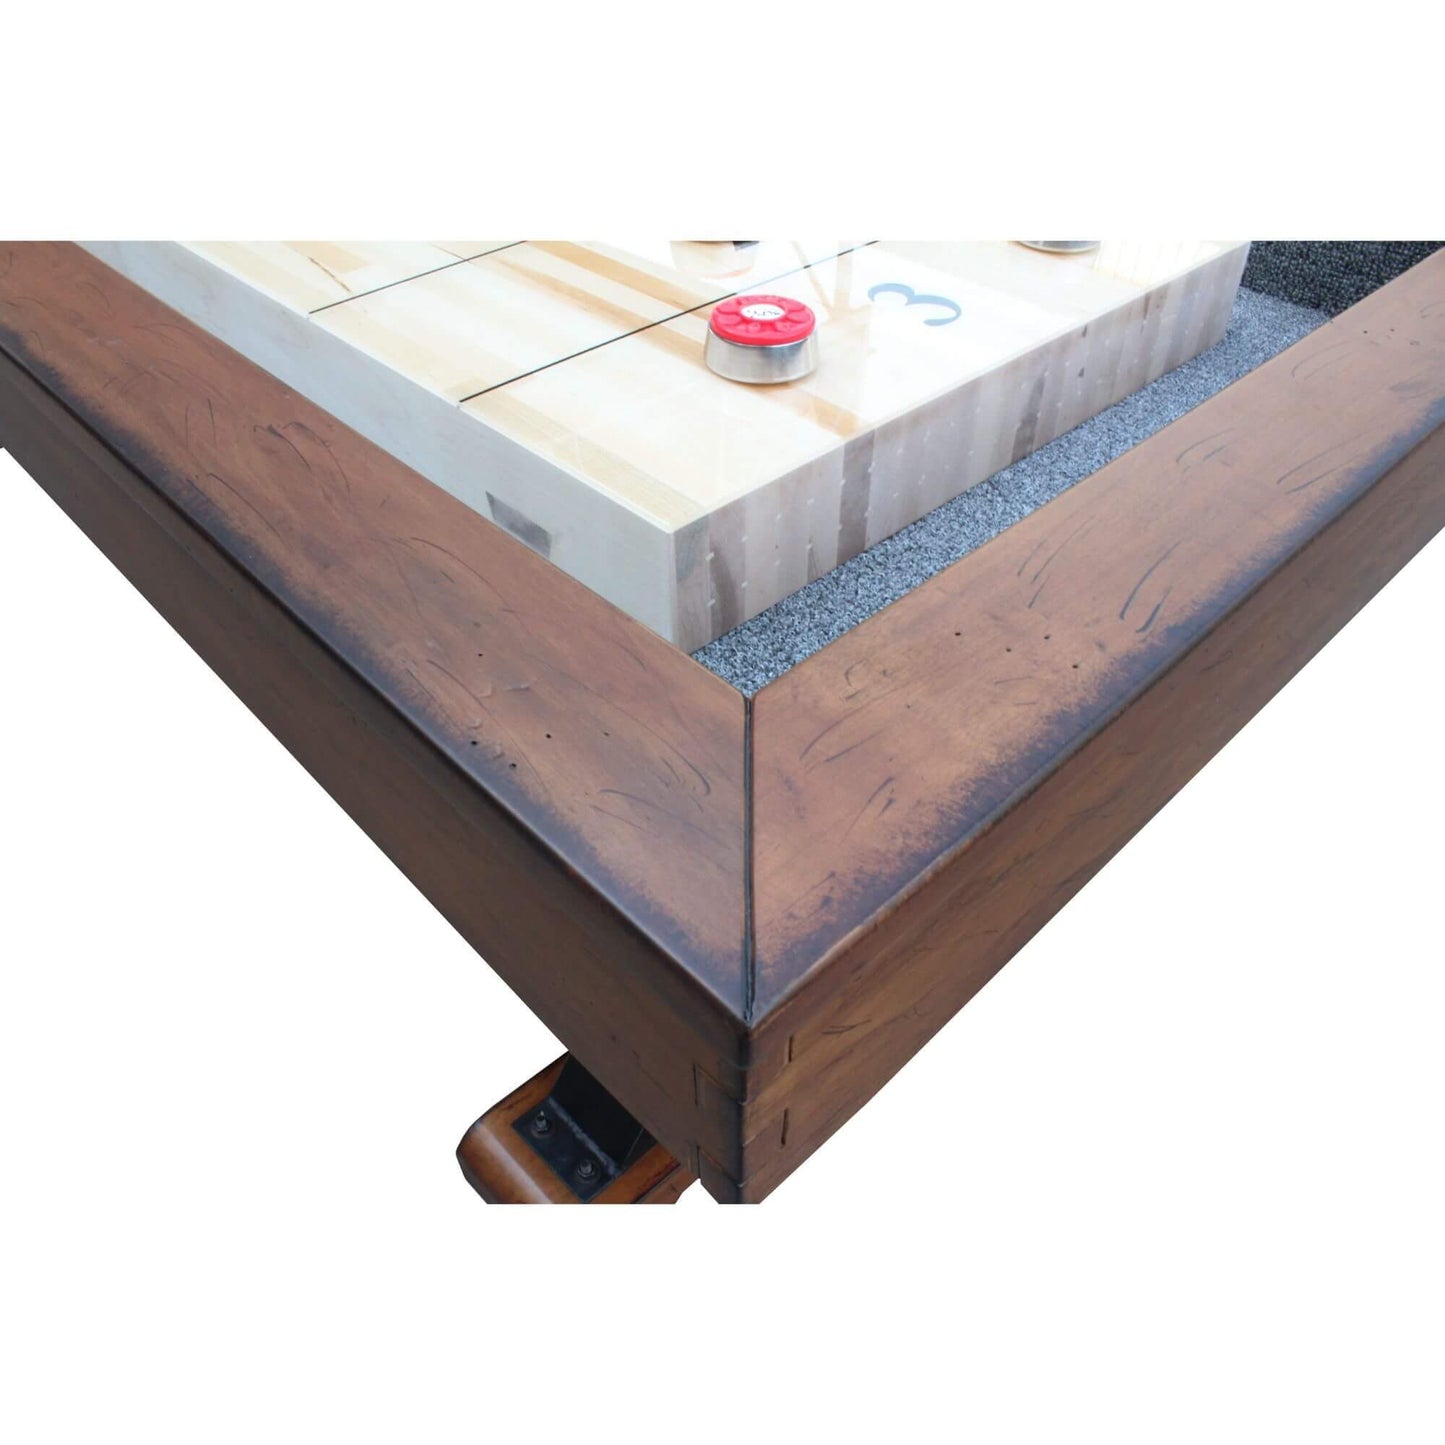 Playcraft Santa Fe Pro-Style Shuffleboard Table - Gaming Blaze